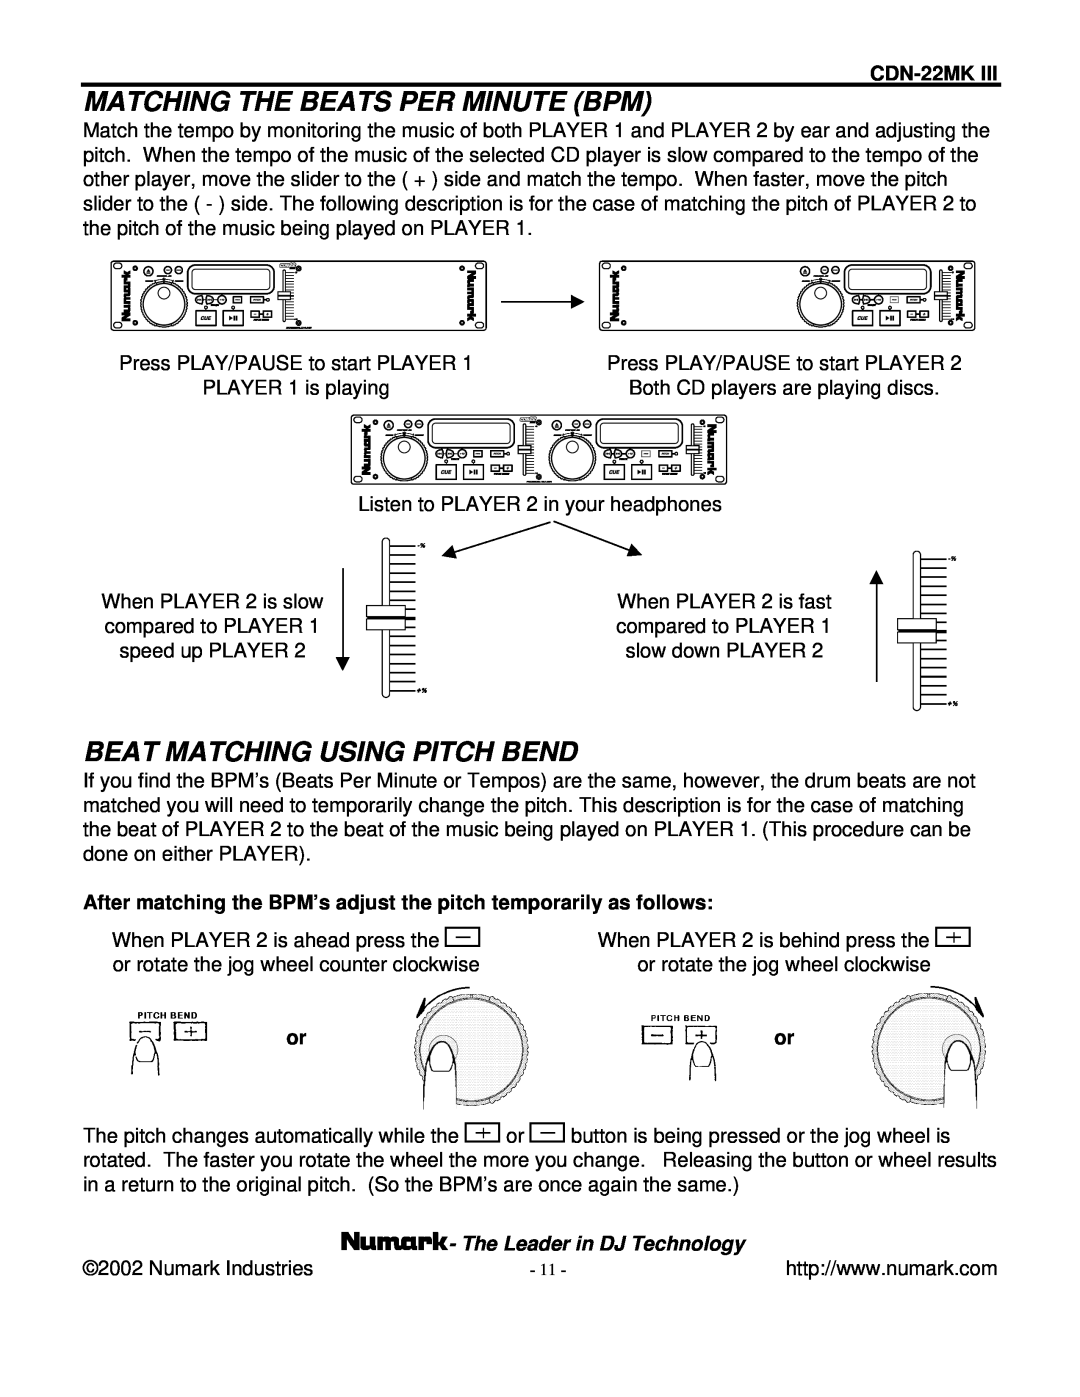 Numark Industries CDN-22MK III manual Matching The Beats Per Minute Bpm, Beat Matching Using Pitch Bend, CDN-22MKIII 